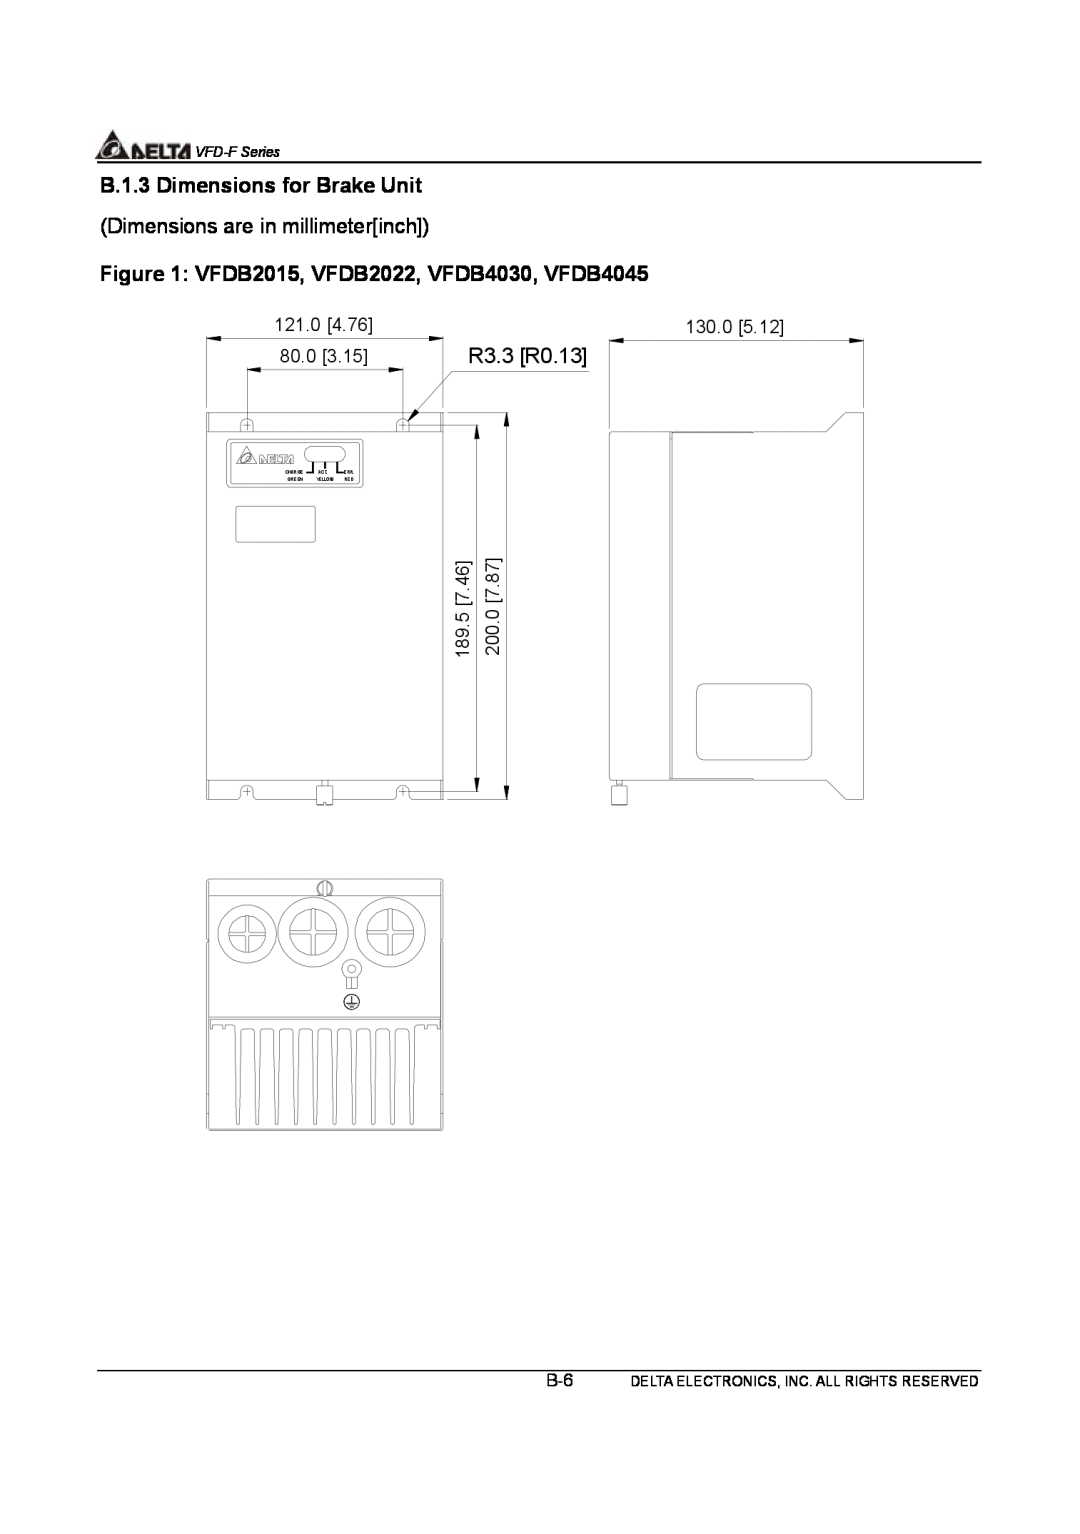 Delta Electronics VFD-F Series manual R3.3 R0.13, B.1.3 Dimensions for Brake Unit, VFDB2015, VFDB2022, VFDB4030, VFDB4045 